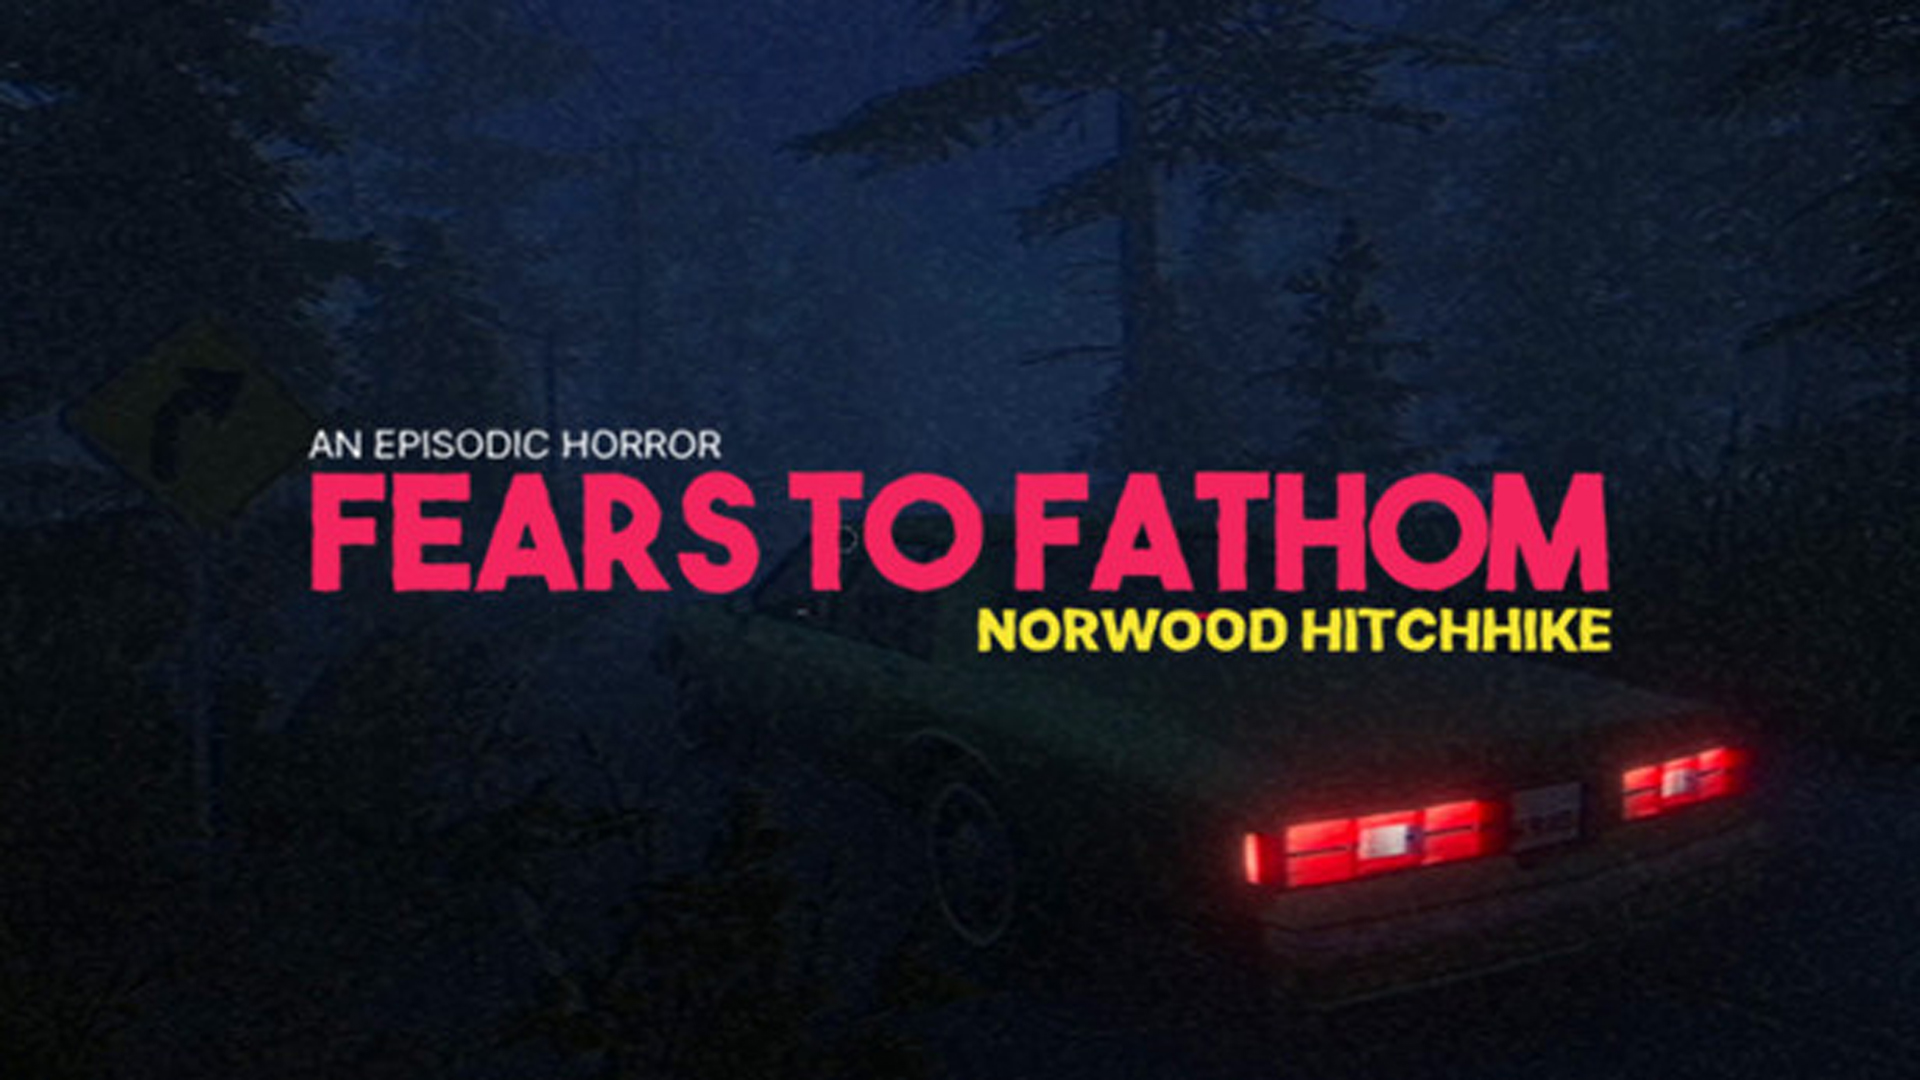 Fears to fathom ironbark пароль. Fears to Fathom. Fears to Fathom Norwood. Norwood hitchhike. Игра Fears to Fathom.